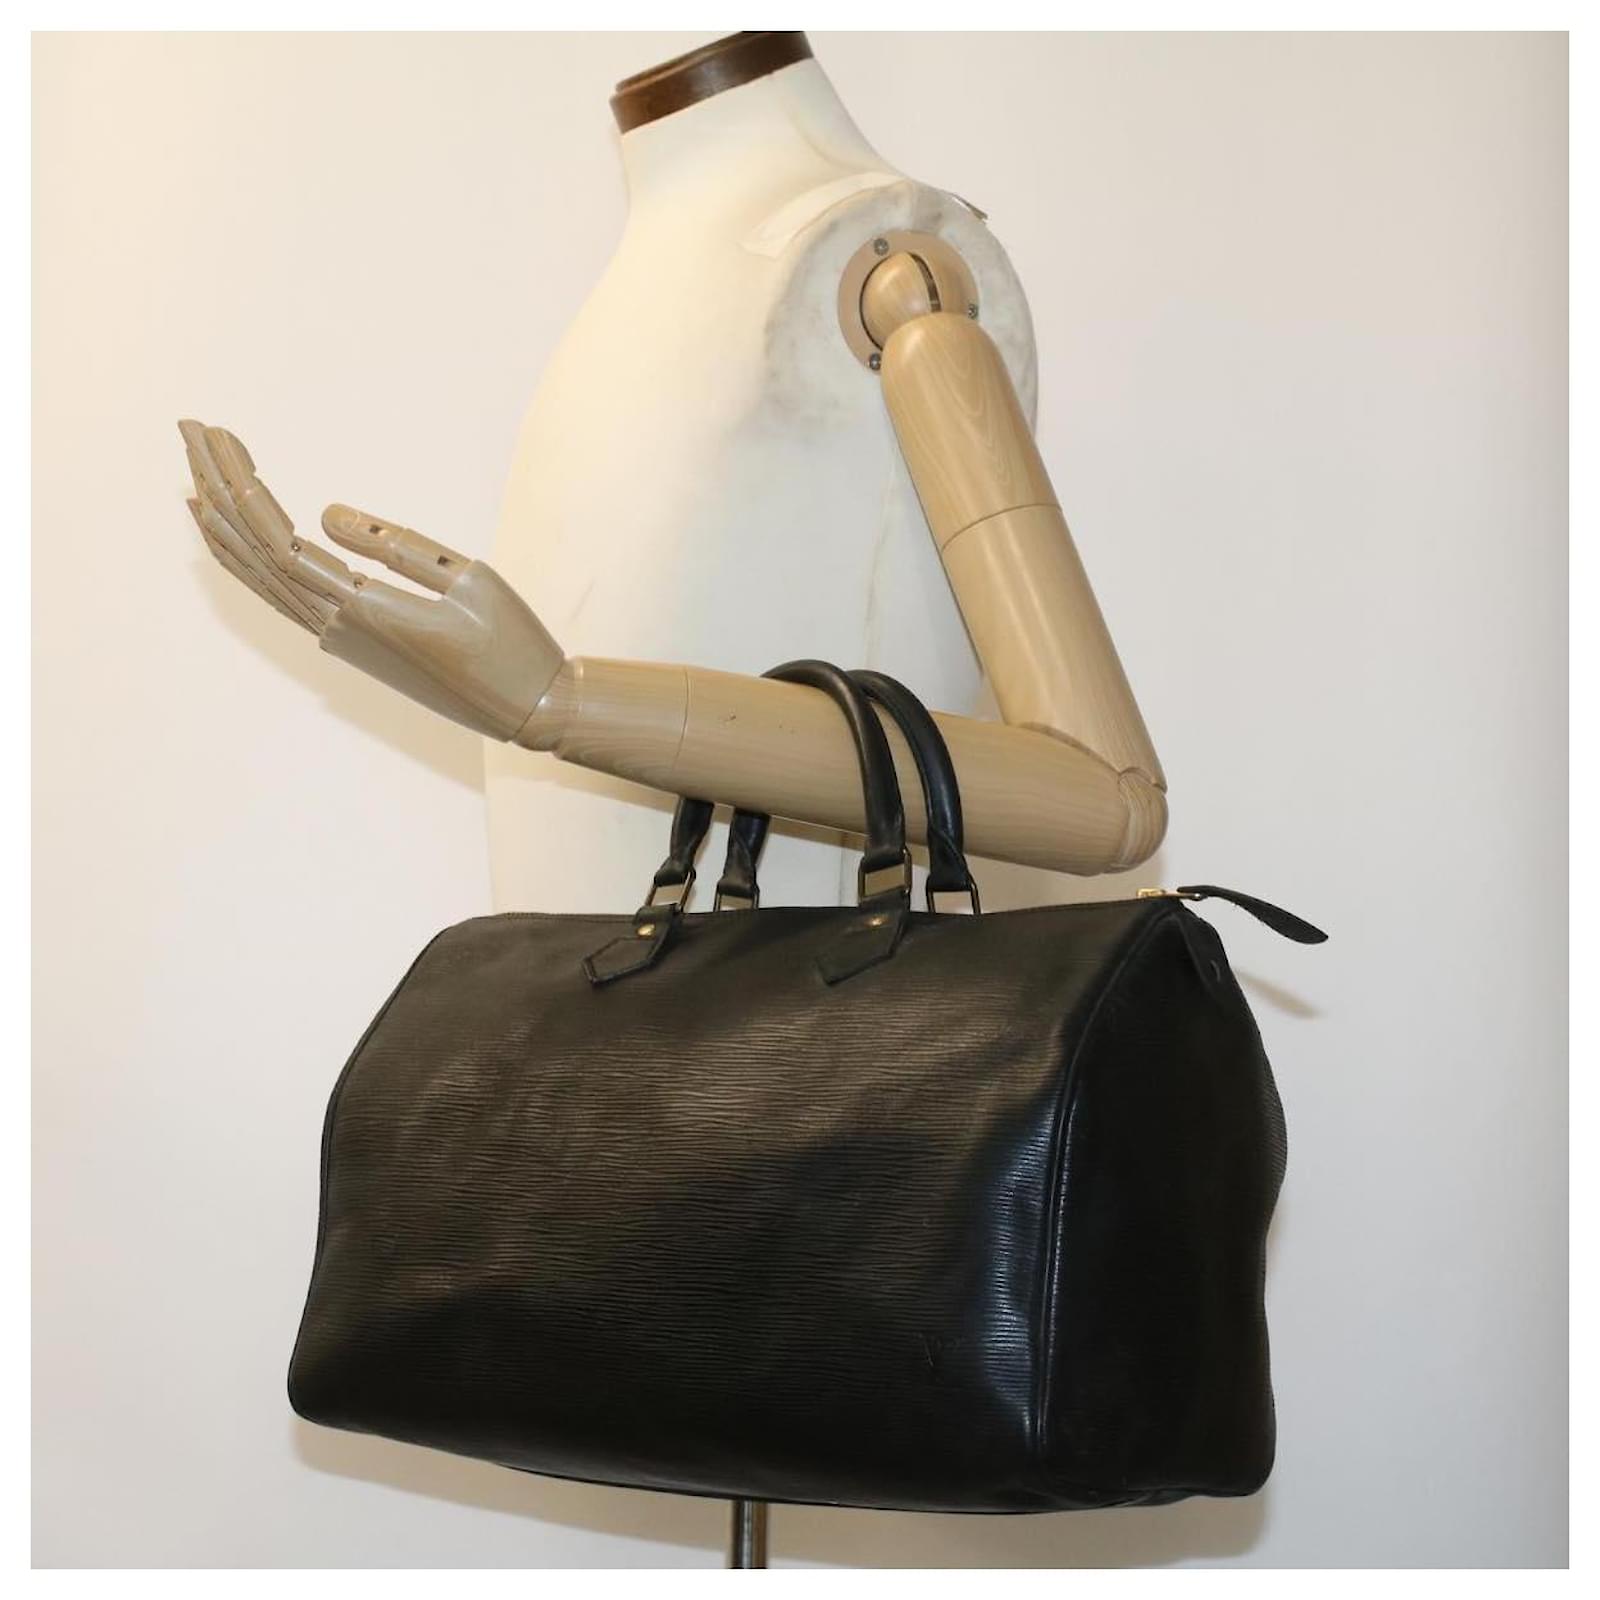 Auth Louis Vuitton Epi Speedy 35 M42992 Women's Handbag Noir